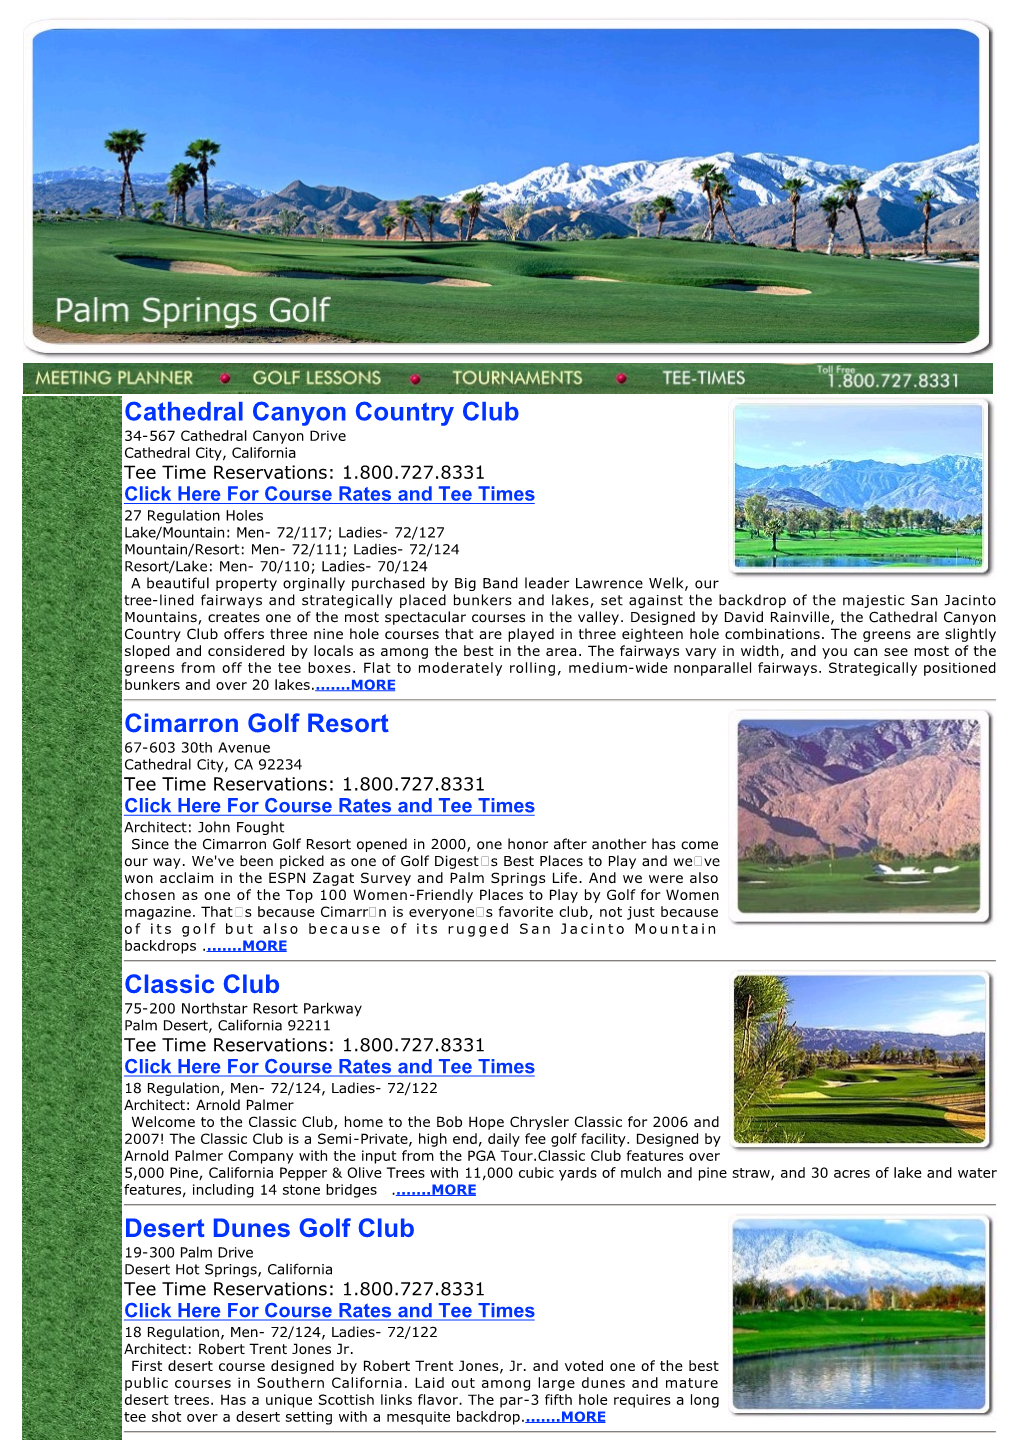 Cathedral Canyon Country Club Cimarron Golf Resort Classic Club Desert Dunes Golf Club